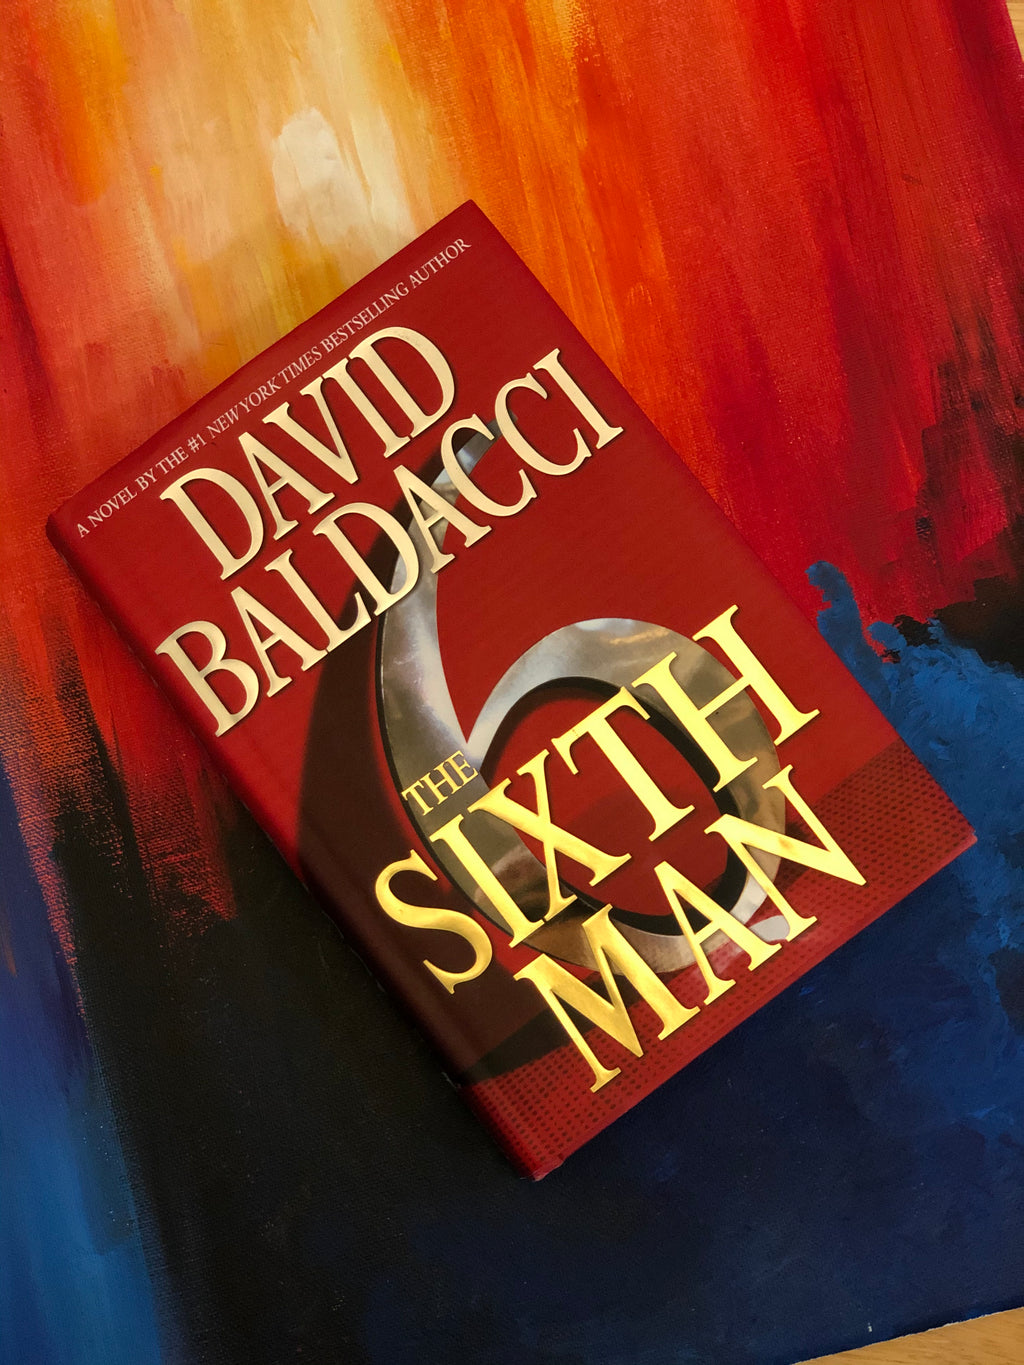 The Sixth Man- By David Baldacci